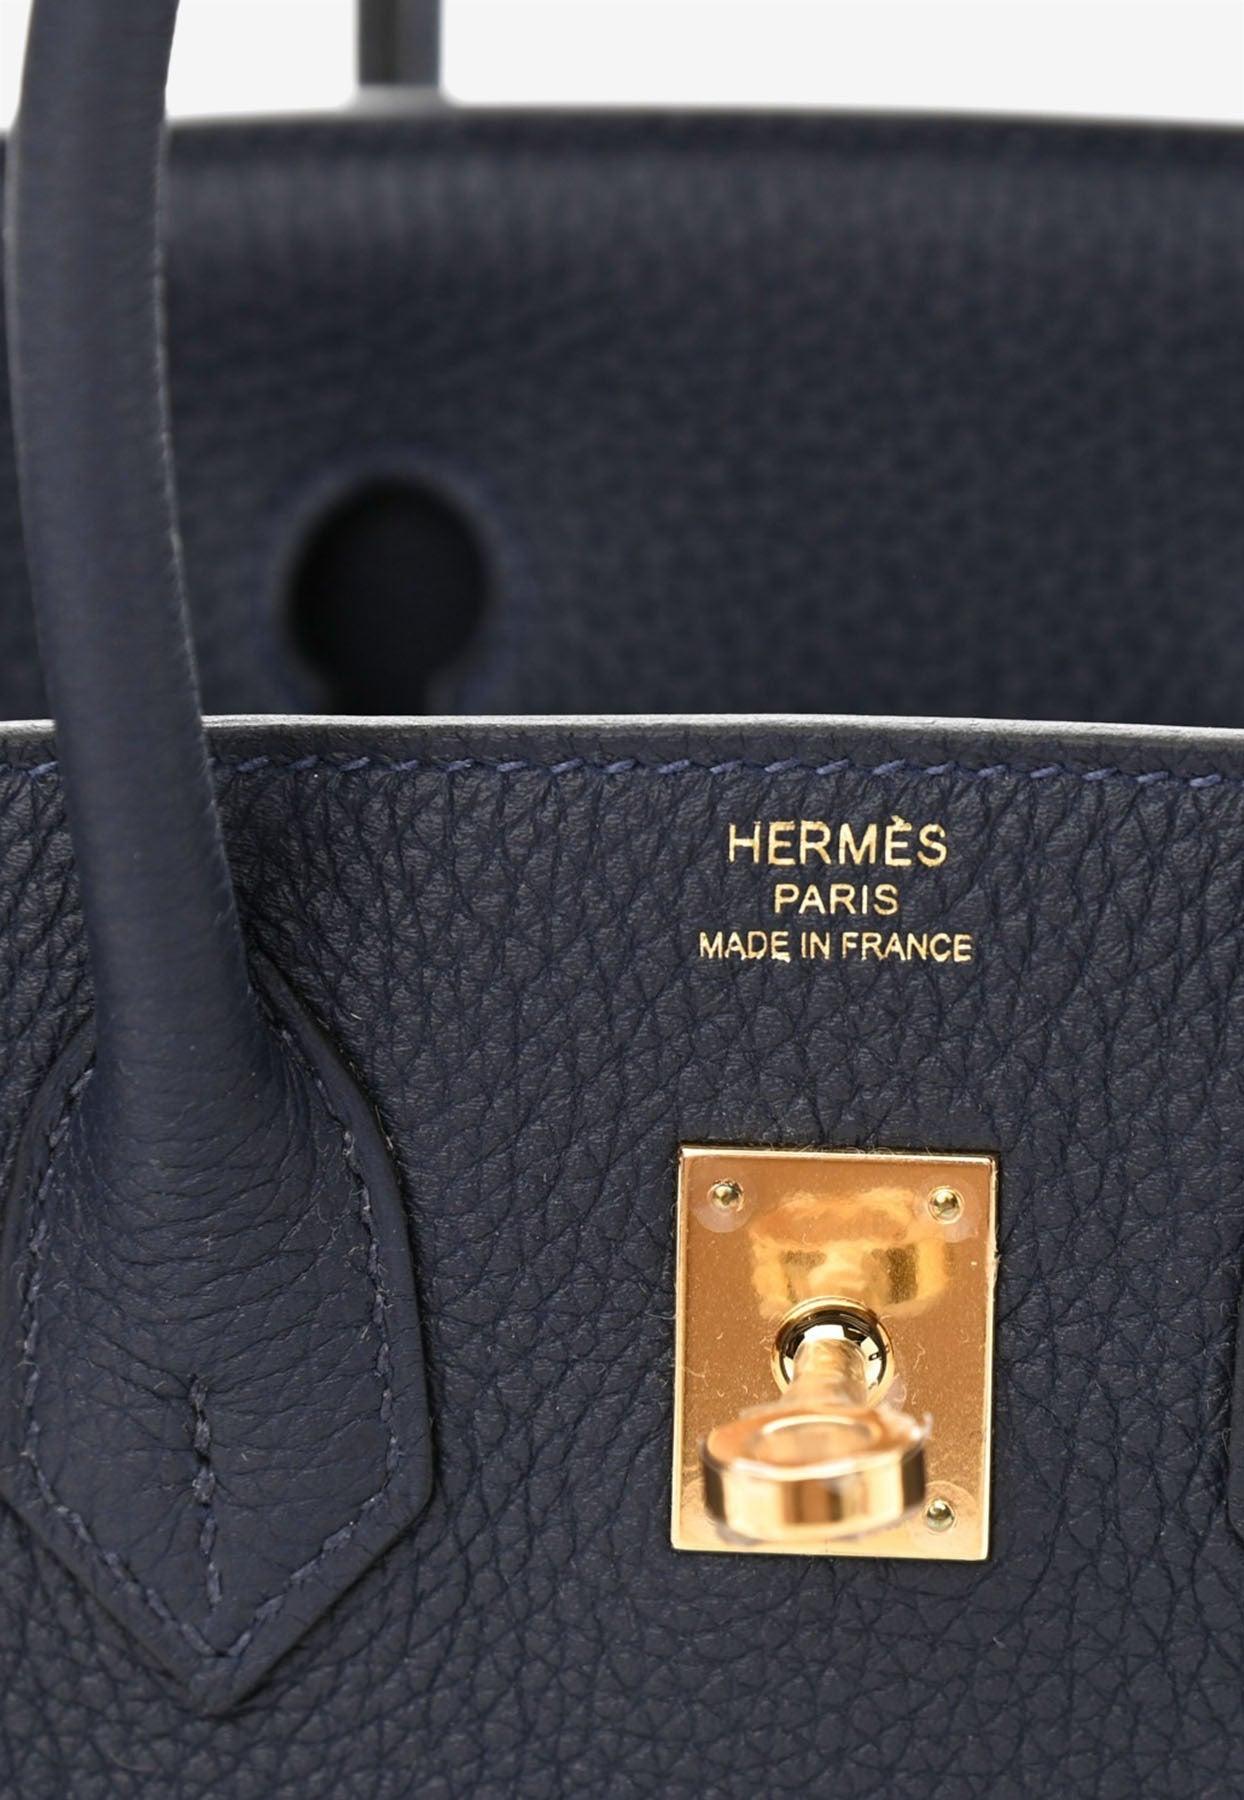 Hermes Birkin 25 Bleu Nuit Togo GHW Handbag in Box 2020